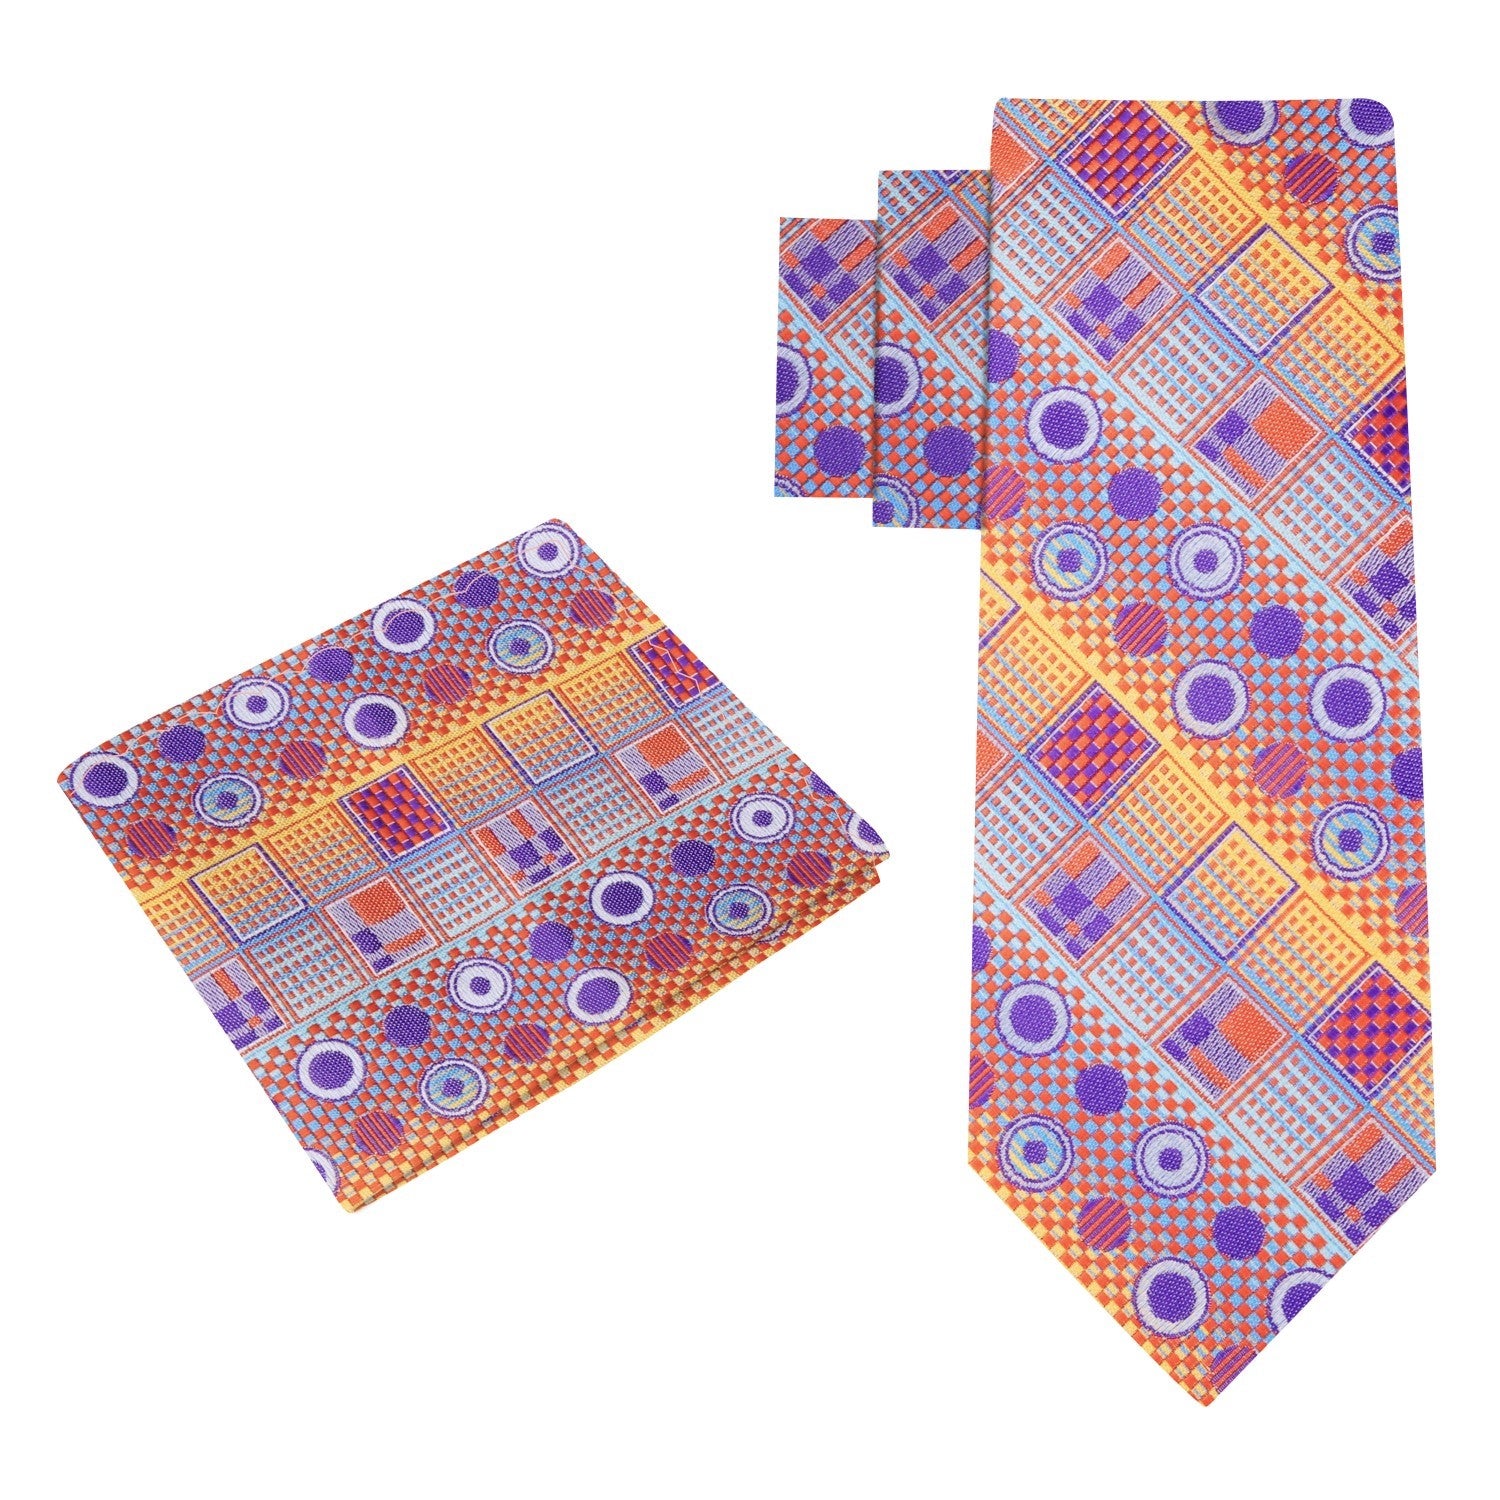 Alt View: Orange, Purple Circles and Squares Tie and Pocket Square